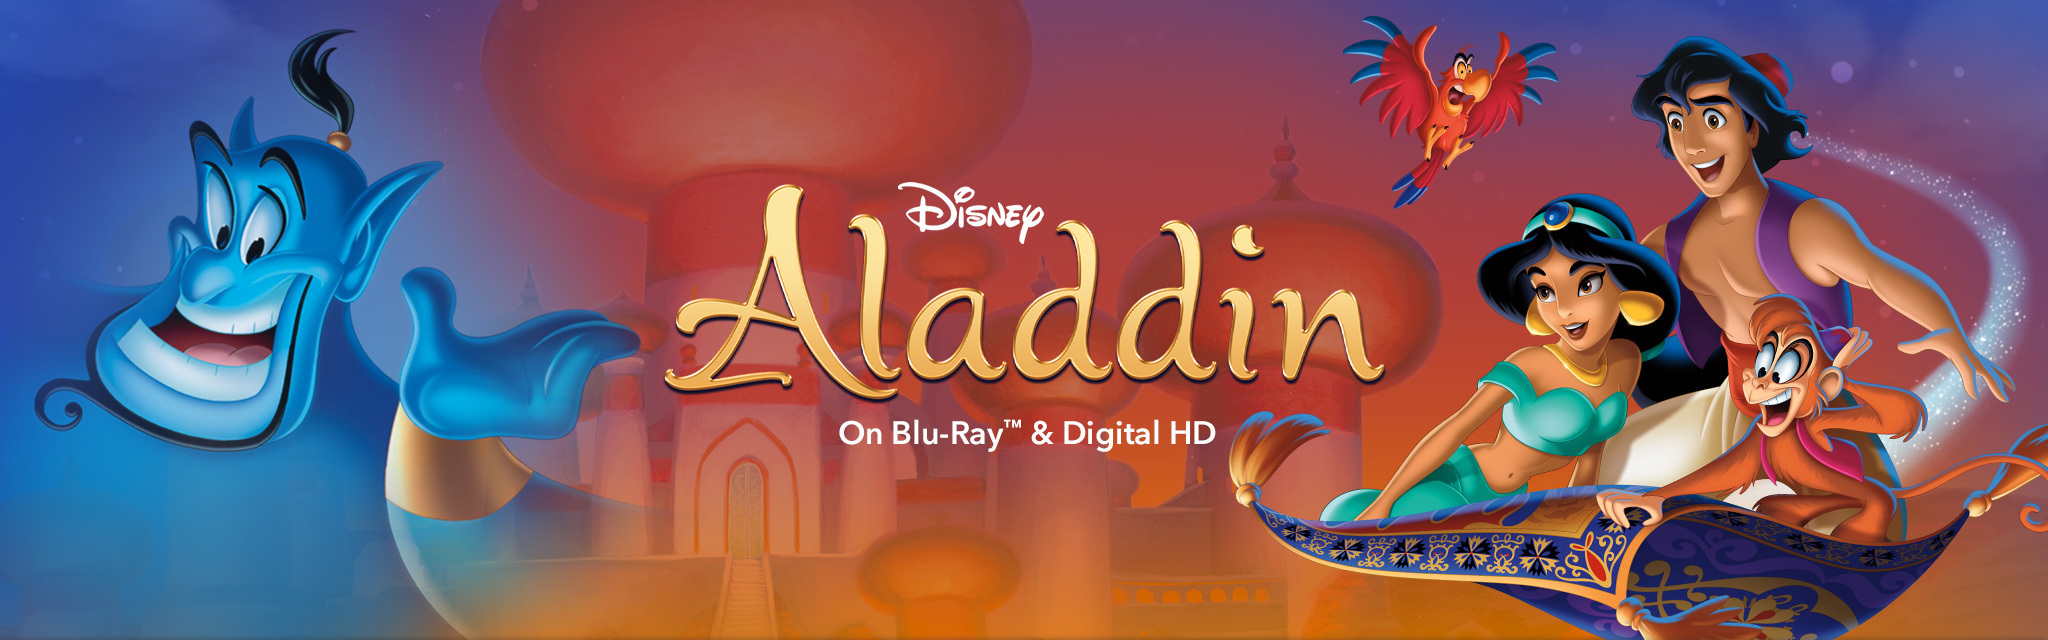 Aladdin La serie Animada